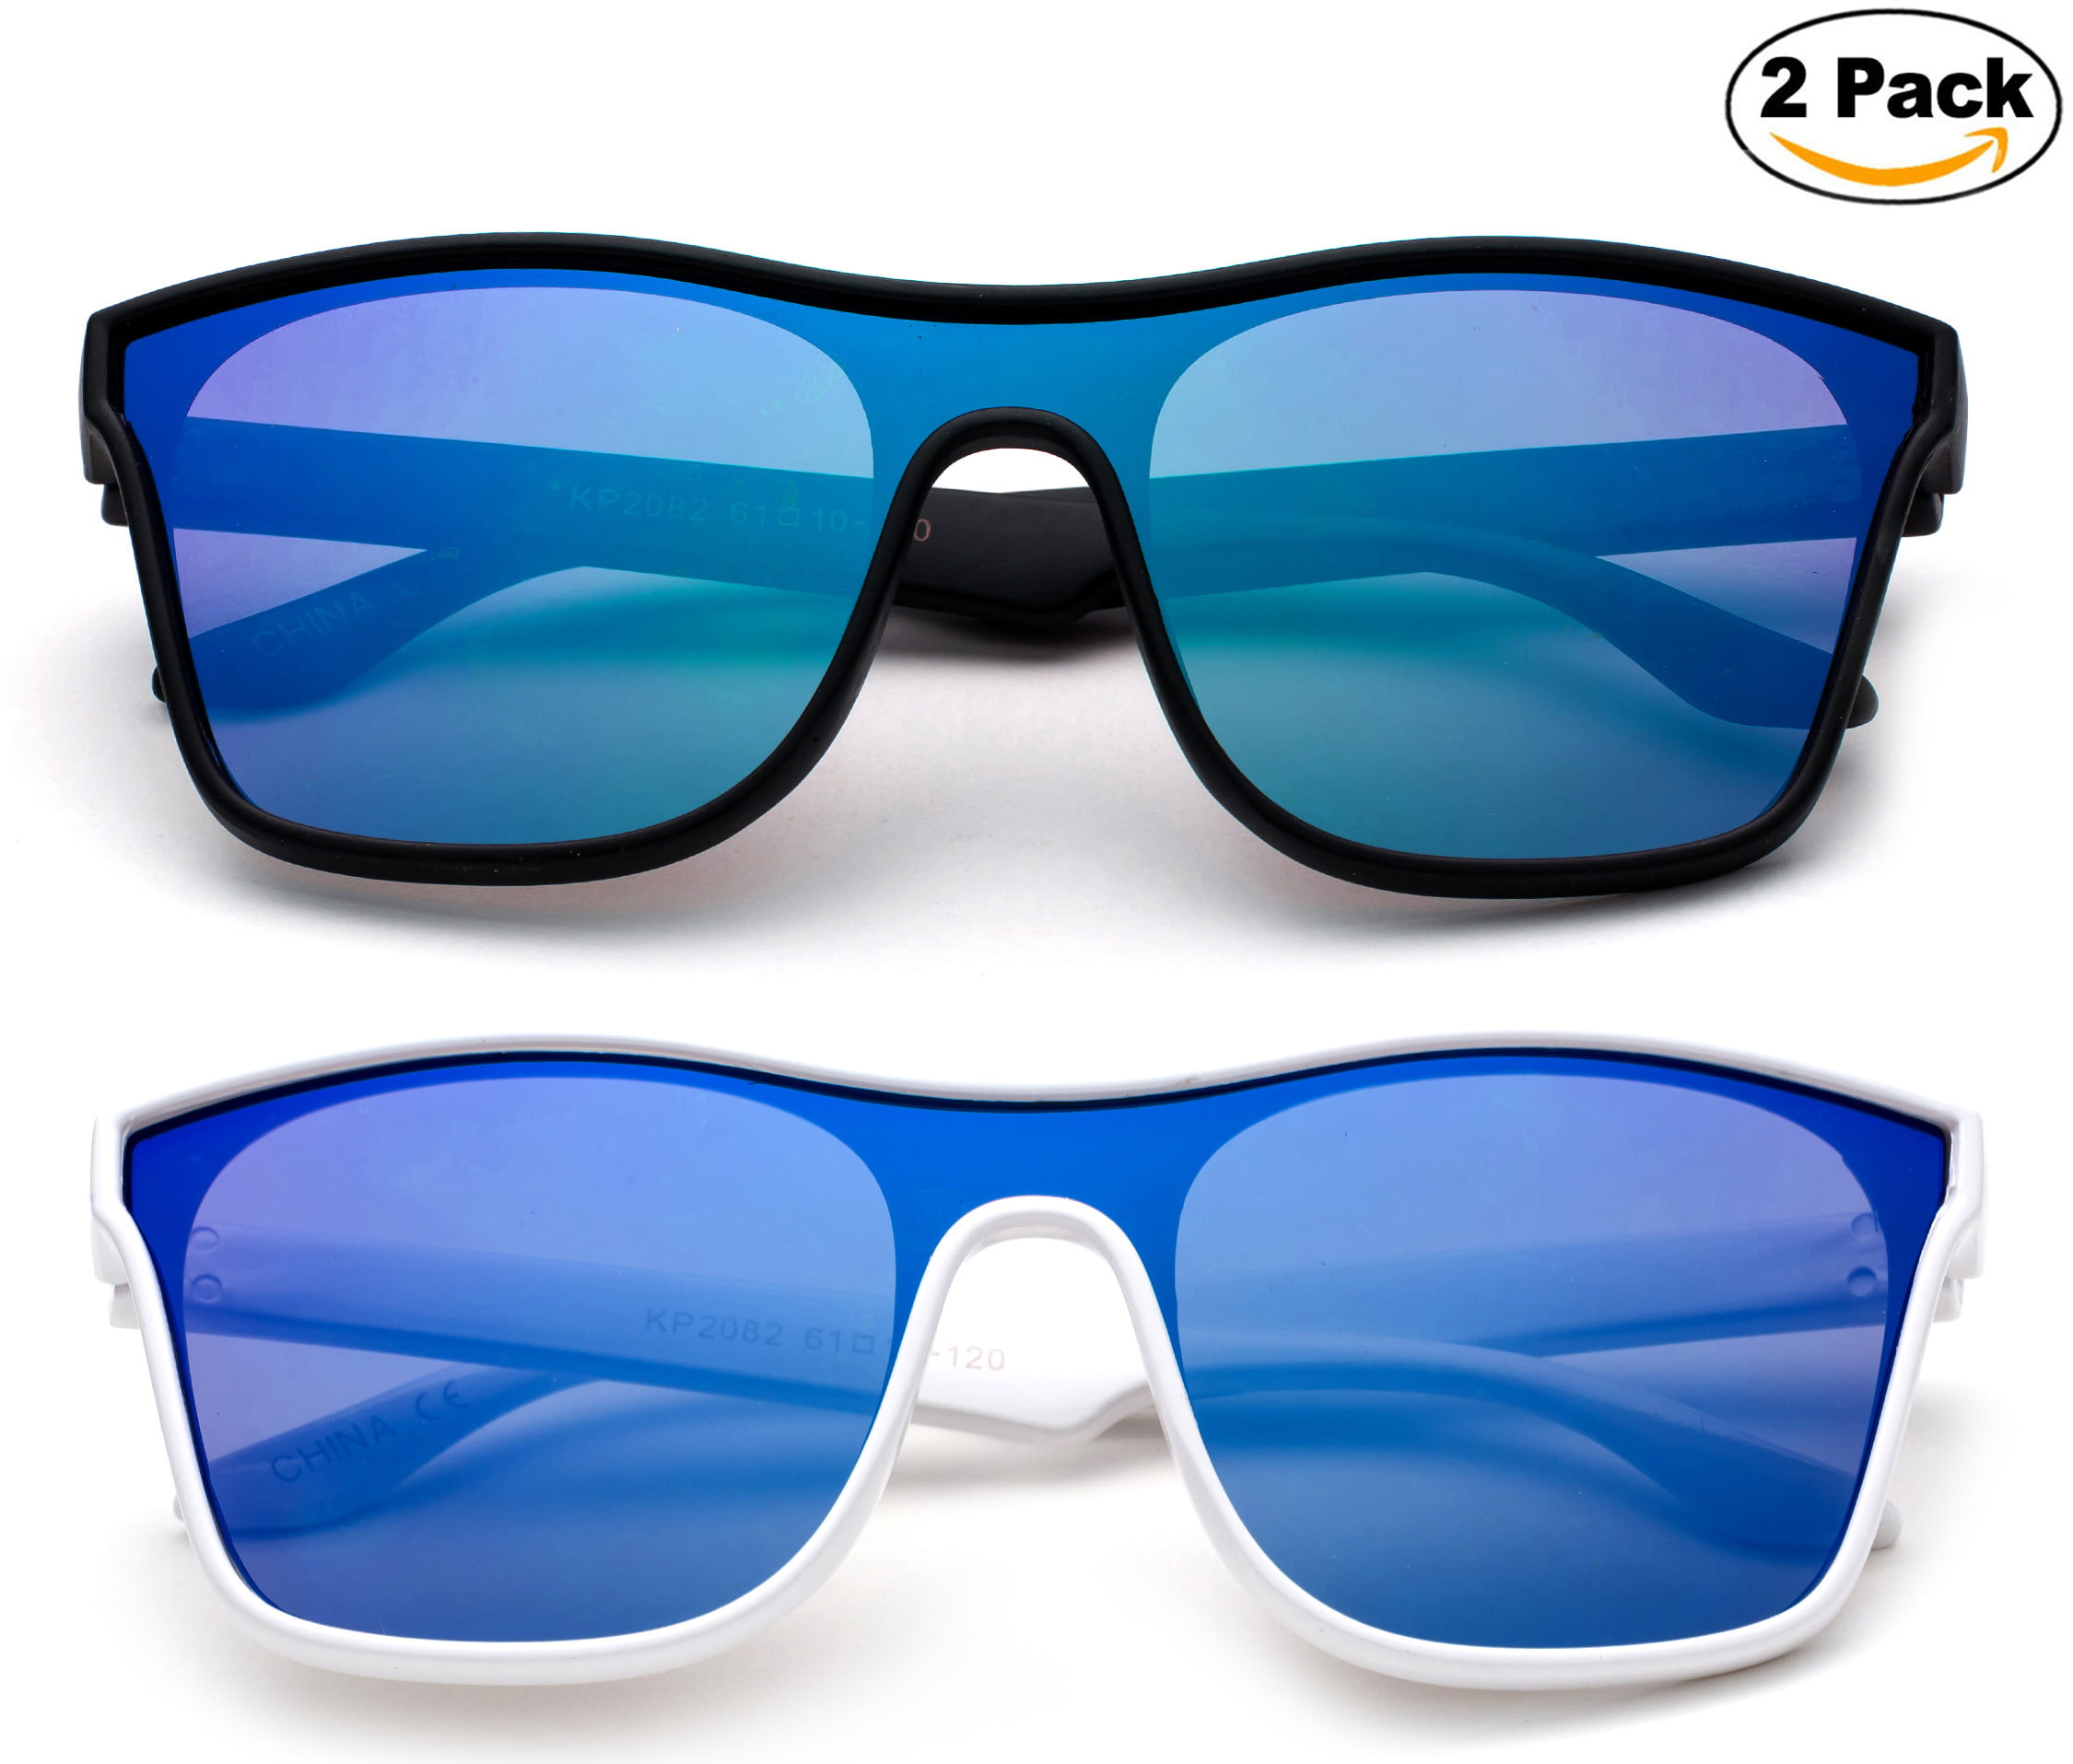 Newbee Fashion - Kids Shield Sunglasses Boys Sunglasses Cool & Fashion Look  One Piece Lens with Flash Mirror Lens Sunglasses for Boys UV Protection  Lead Free 